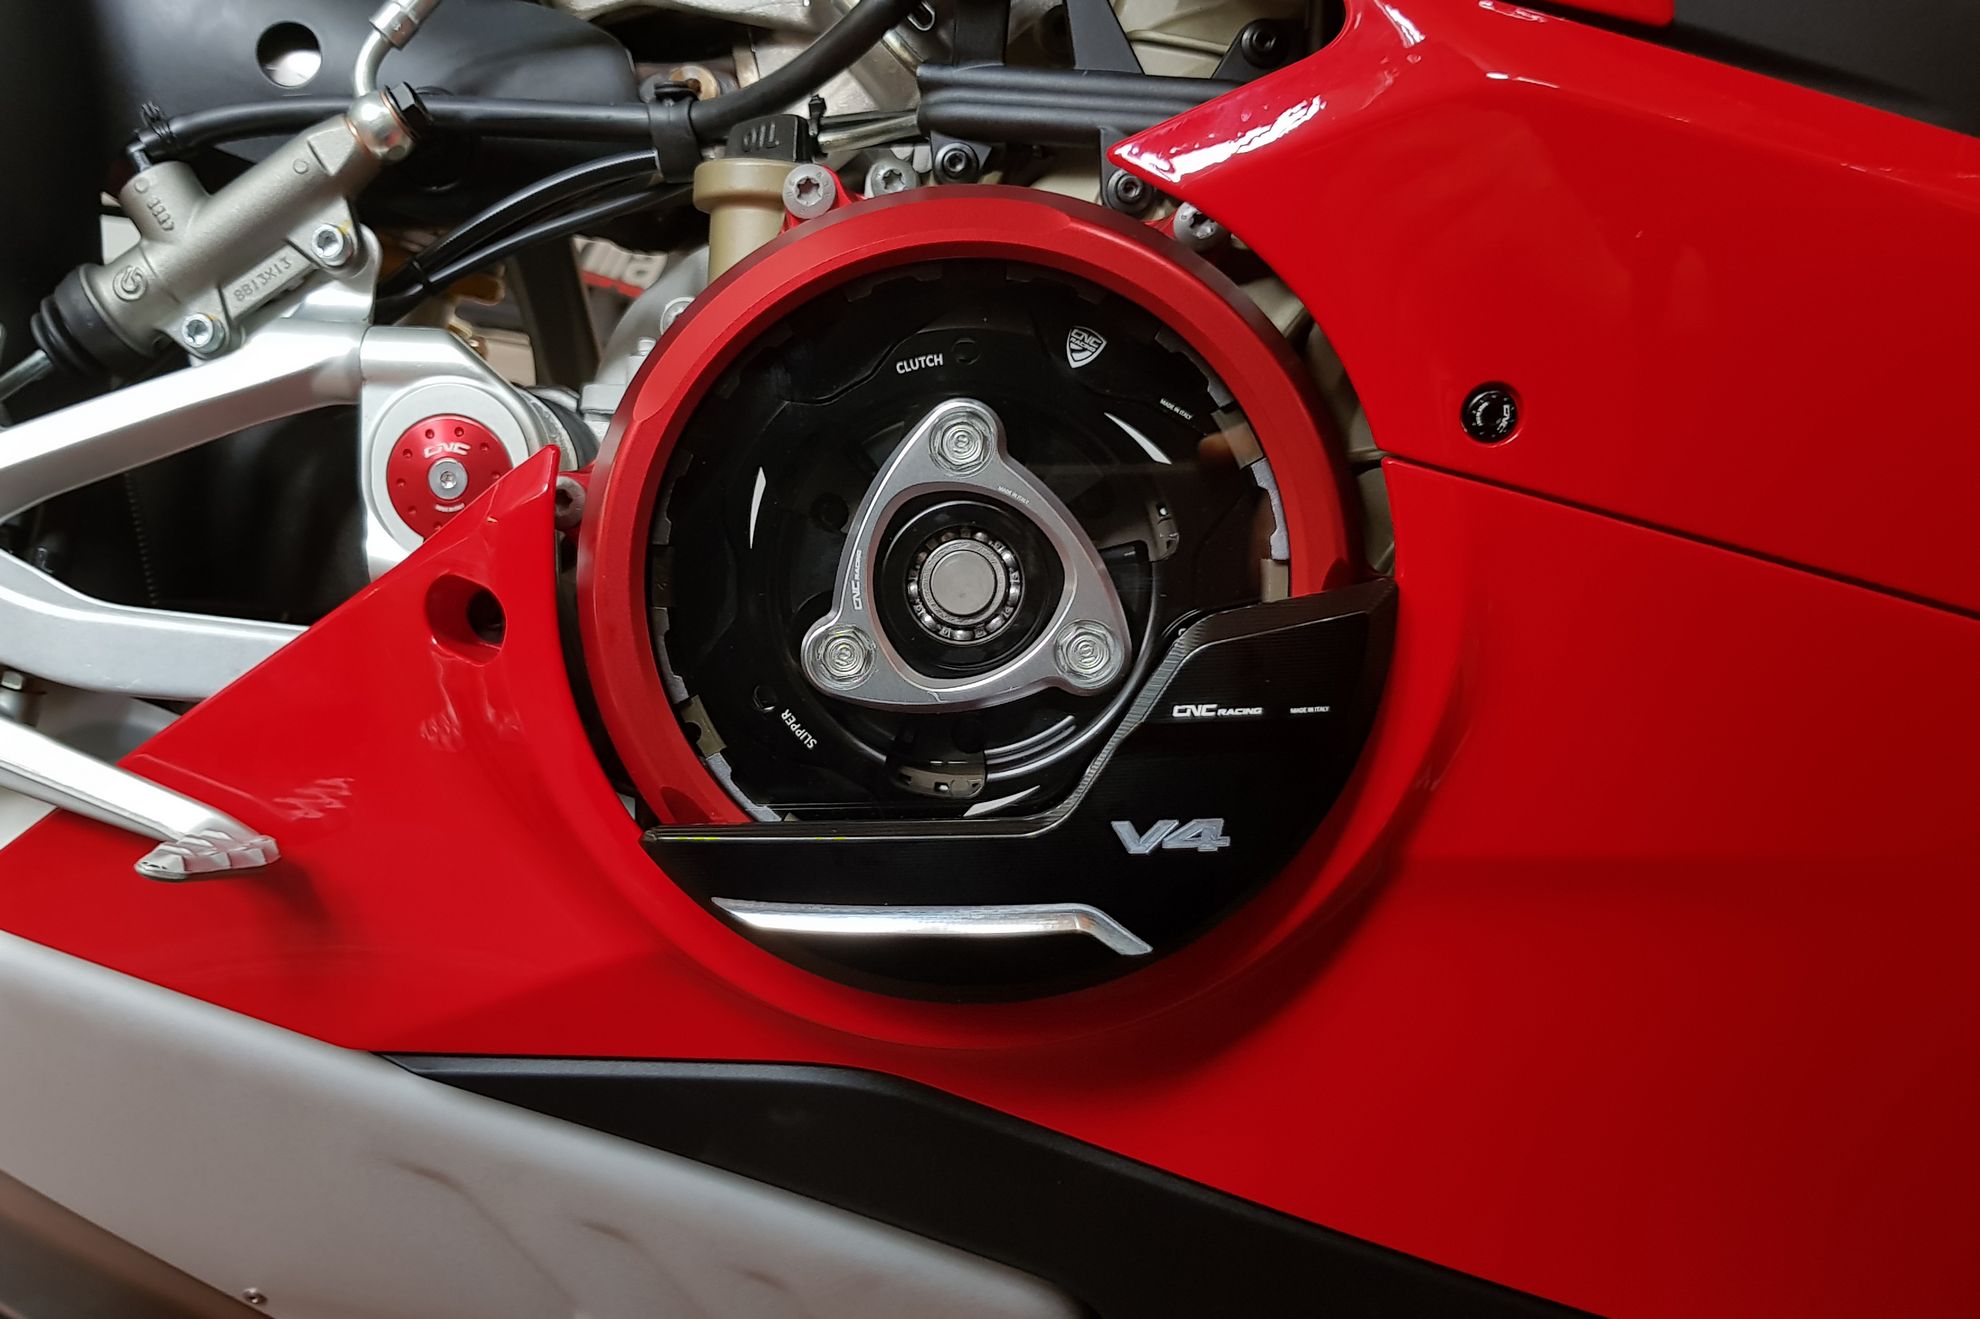 CF266_PR Timing inspection cover Ducati Panigale V4 Pramac Racing CNC RACING 